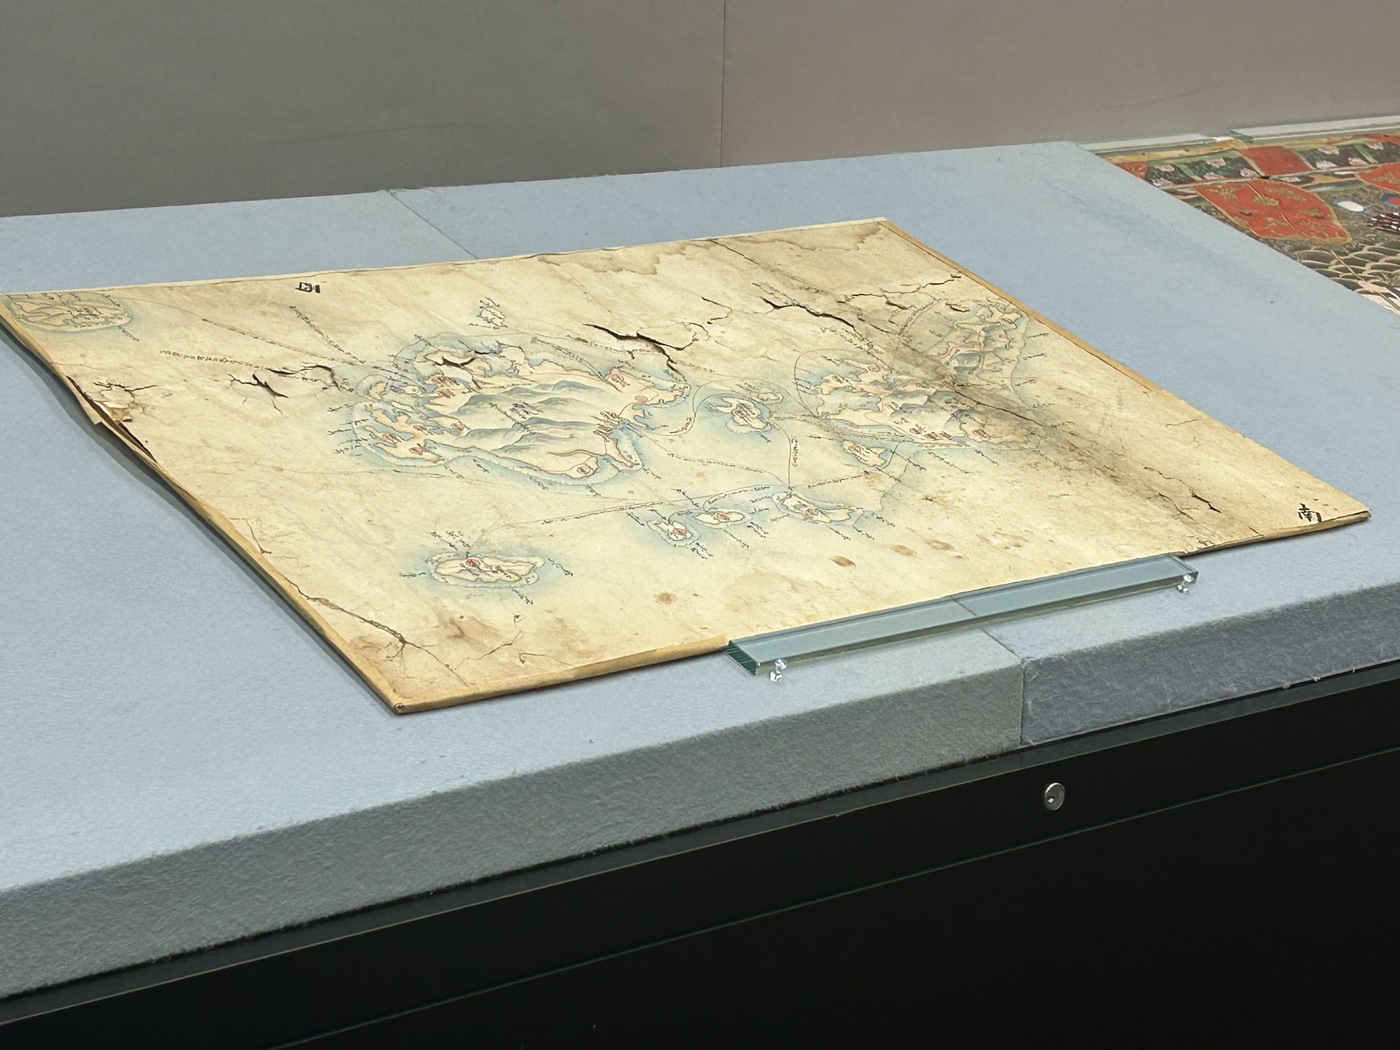 Okinawa hand-drawn map of Okinawa dates back to the 19th century on display.